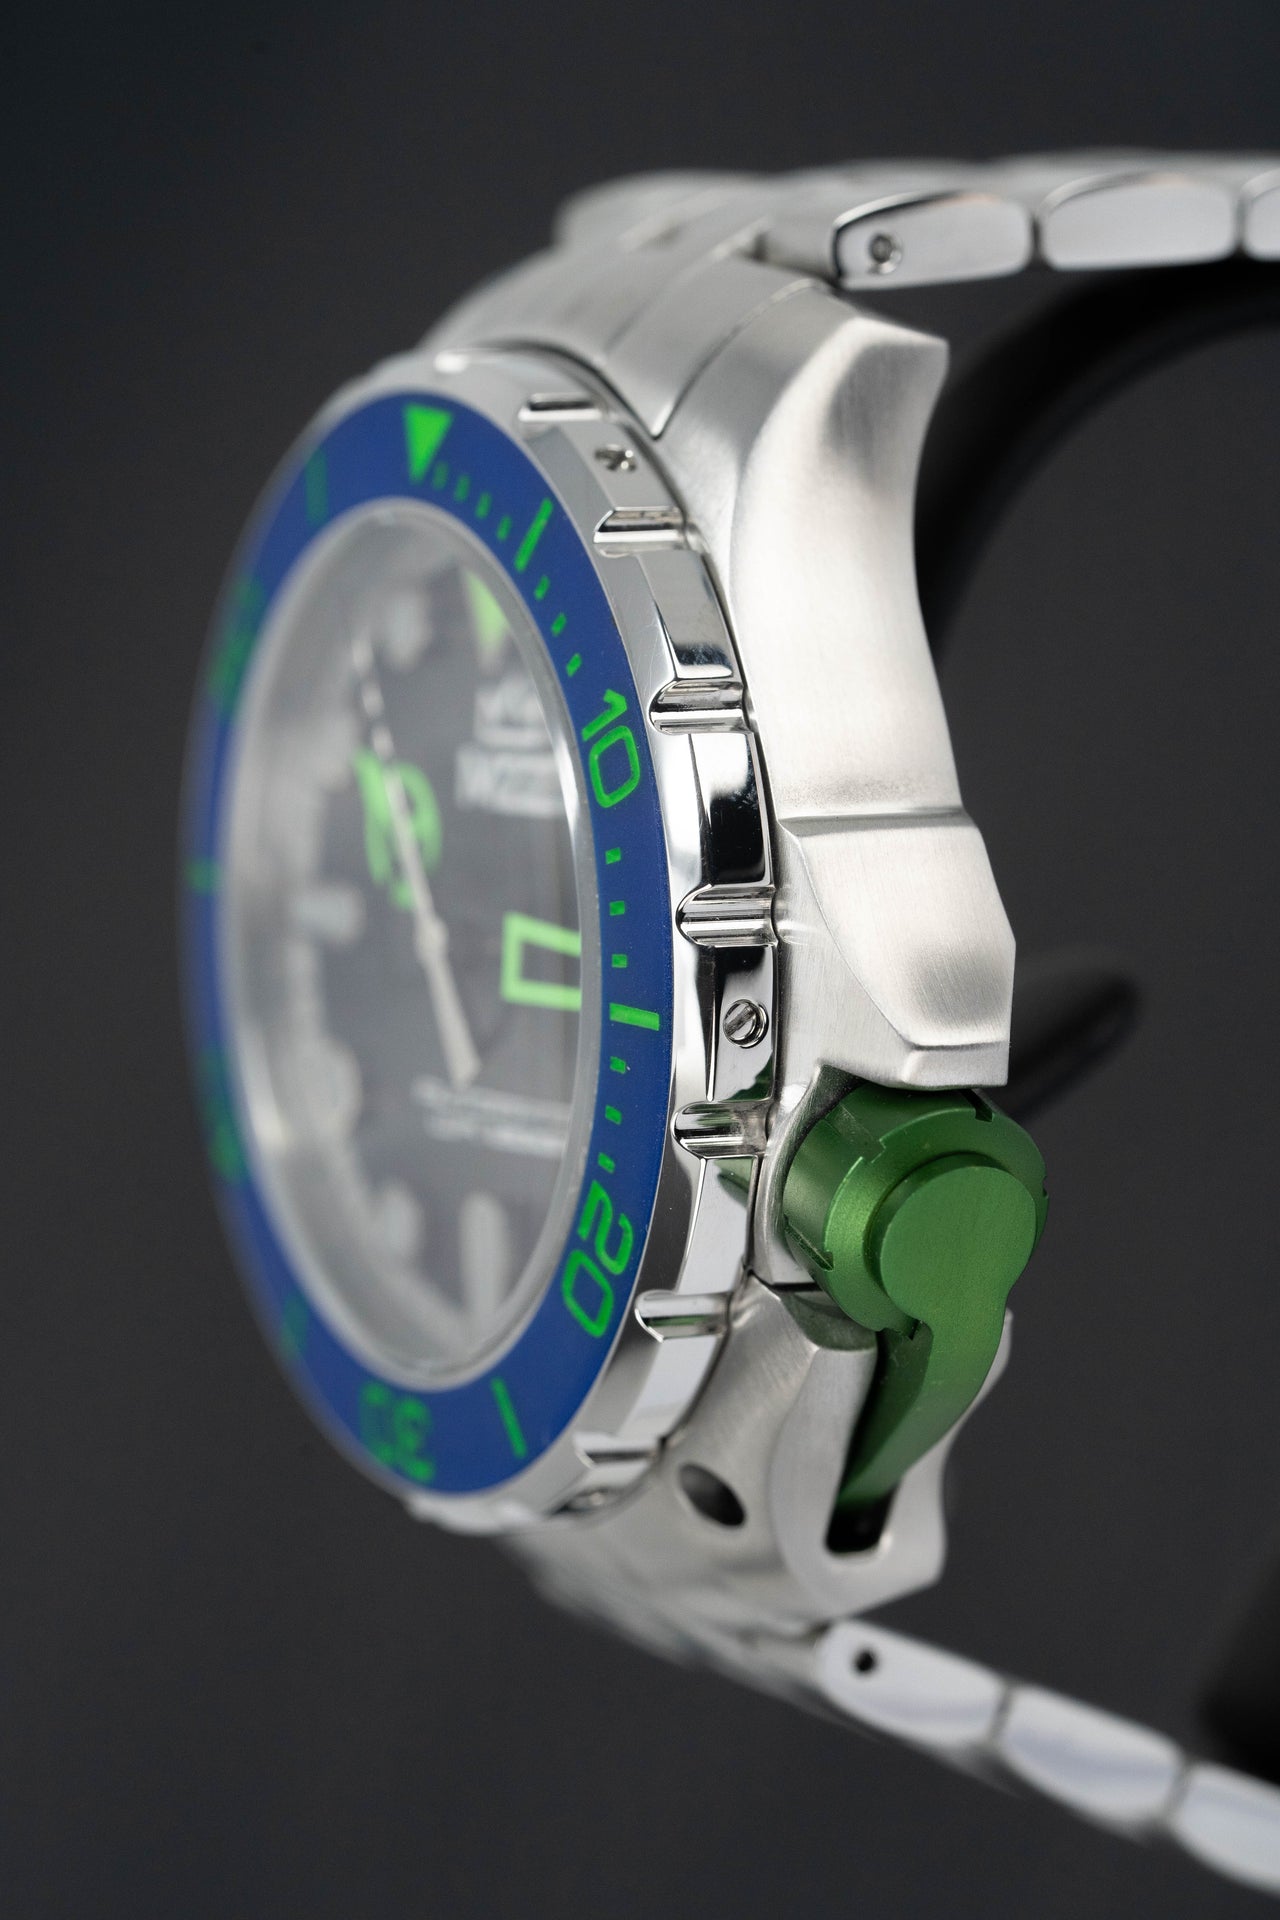 M2Z Men's Watch Diver 200 Bracelet Green Blue 200-003X